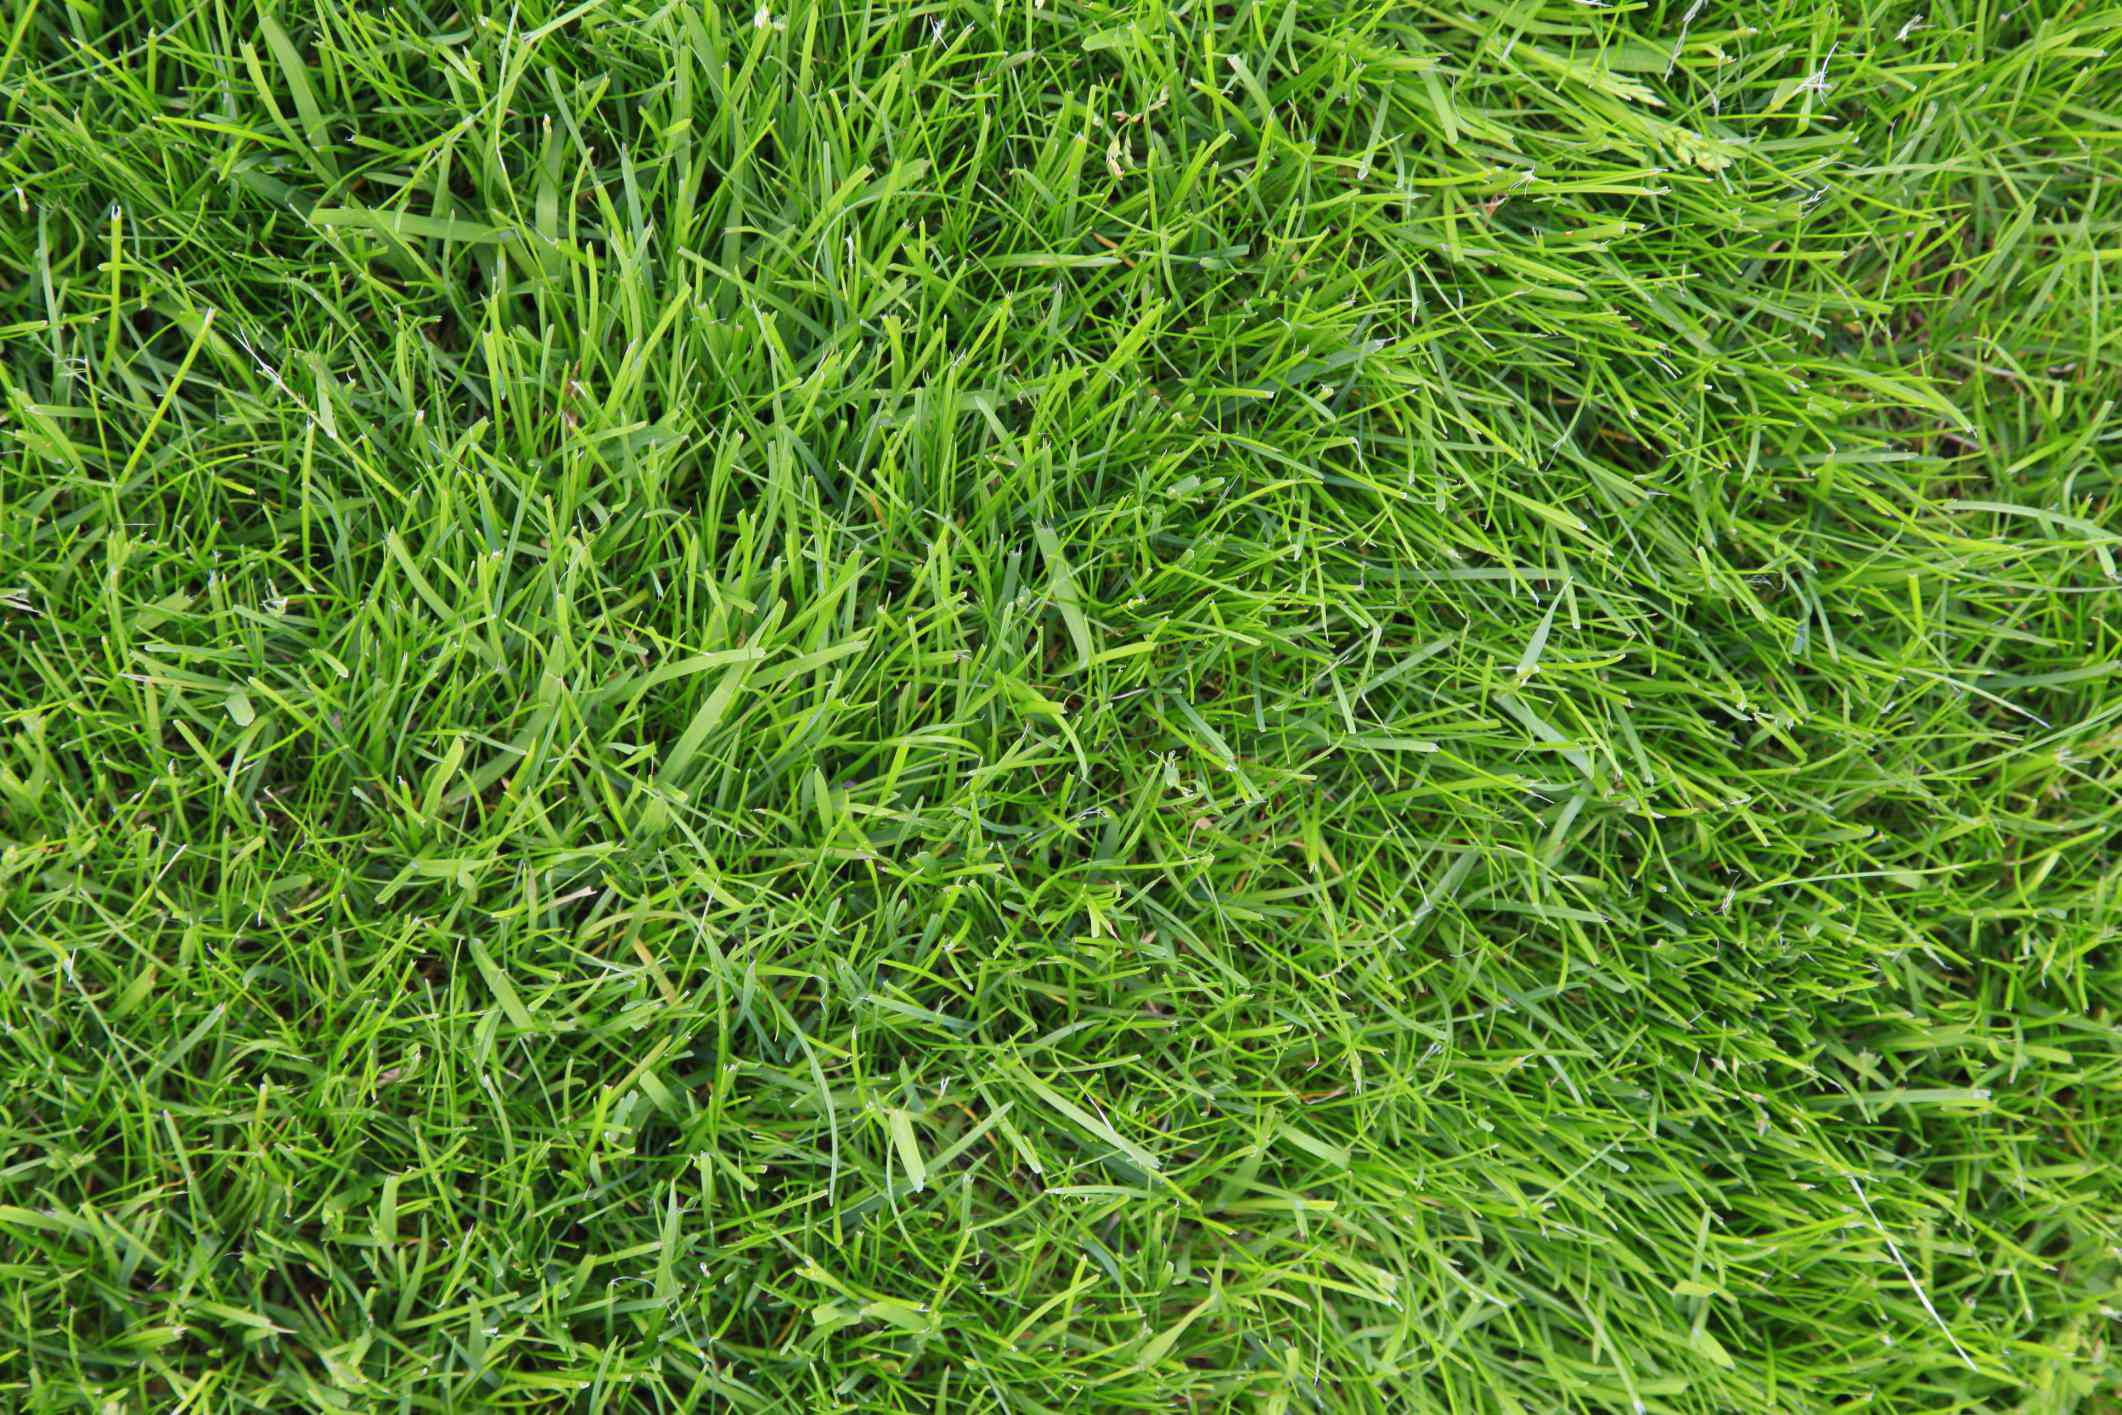 The best drought-tolerant cool season grasses